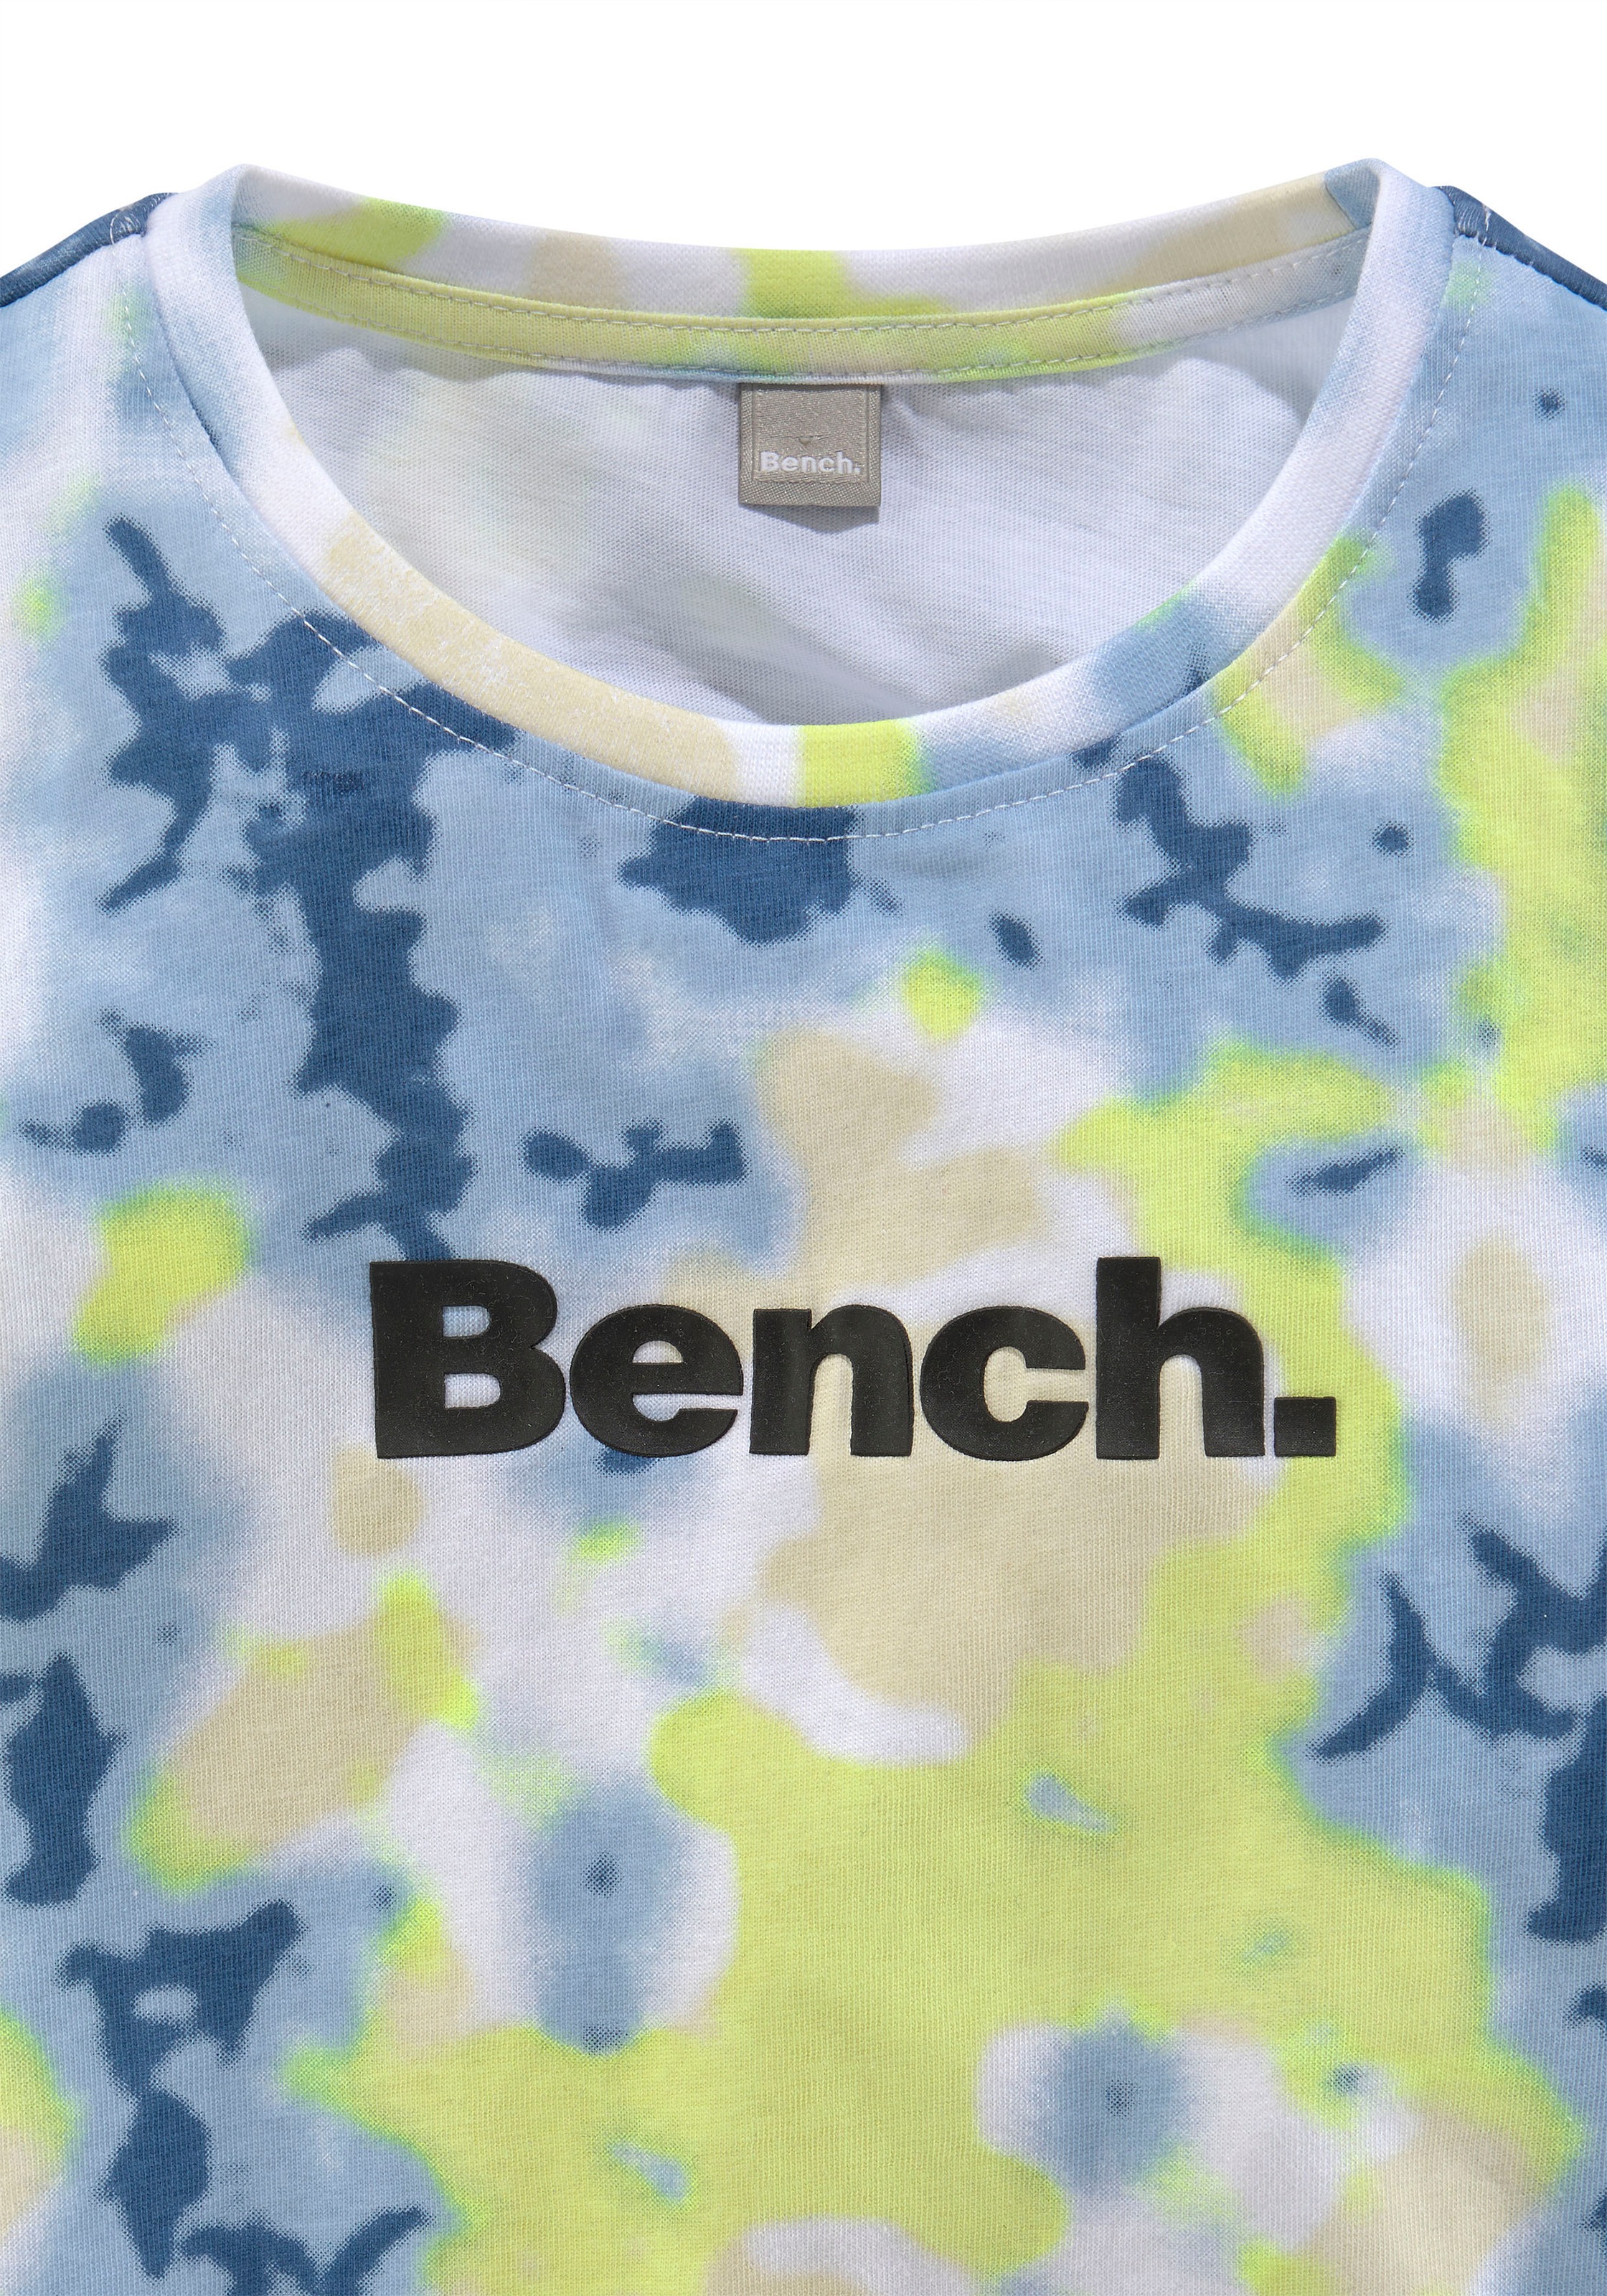 Bench. bestellen »Batik-Druck« T-Shirt online